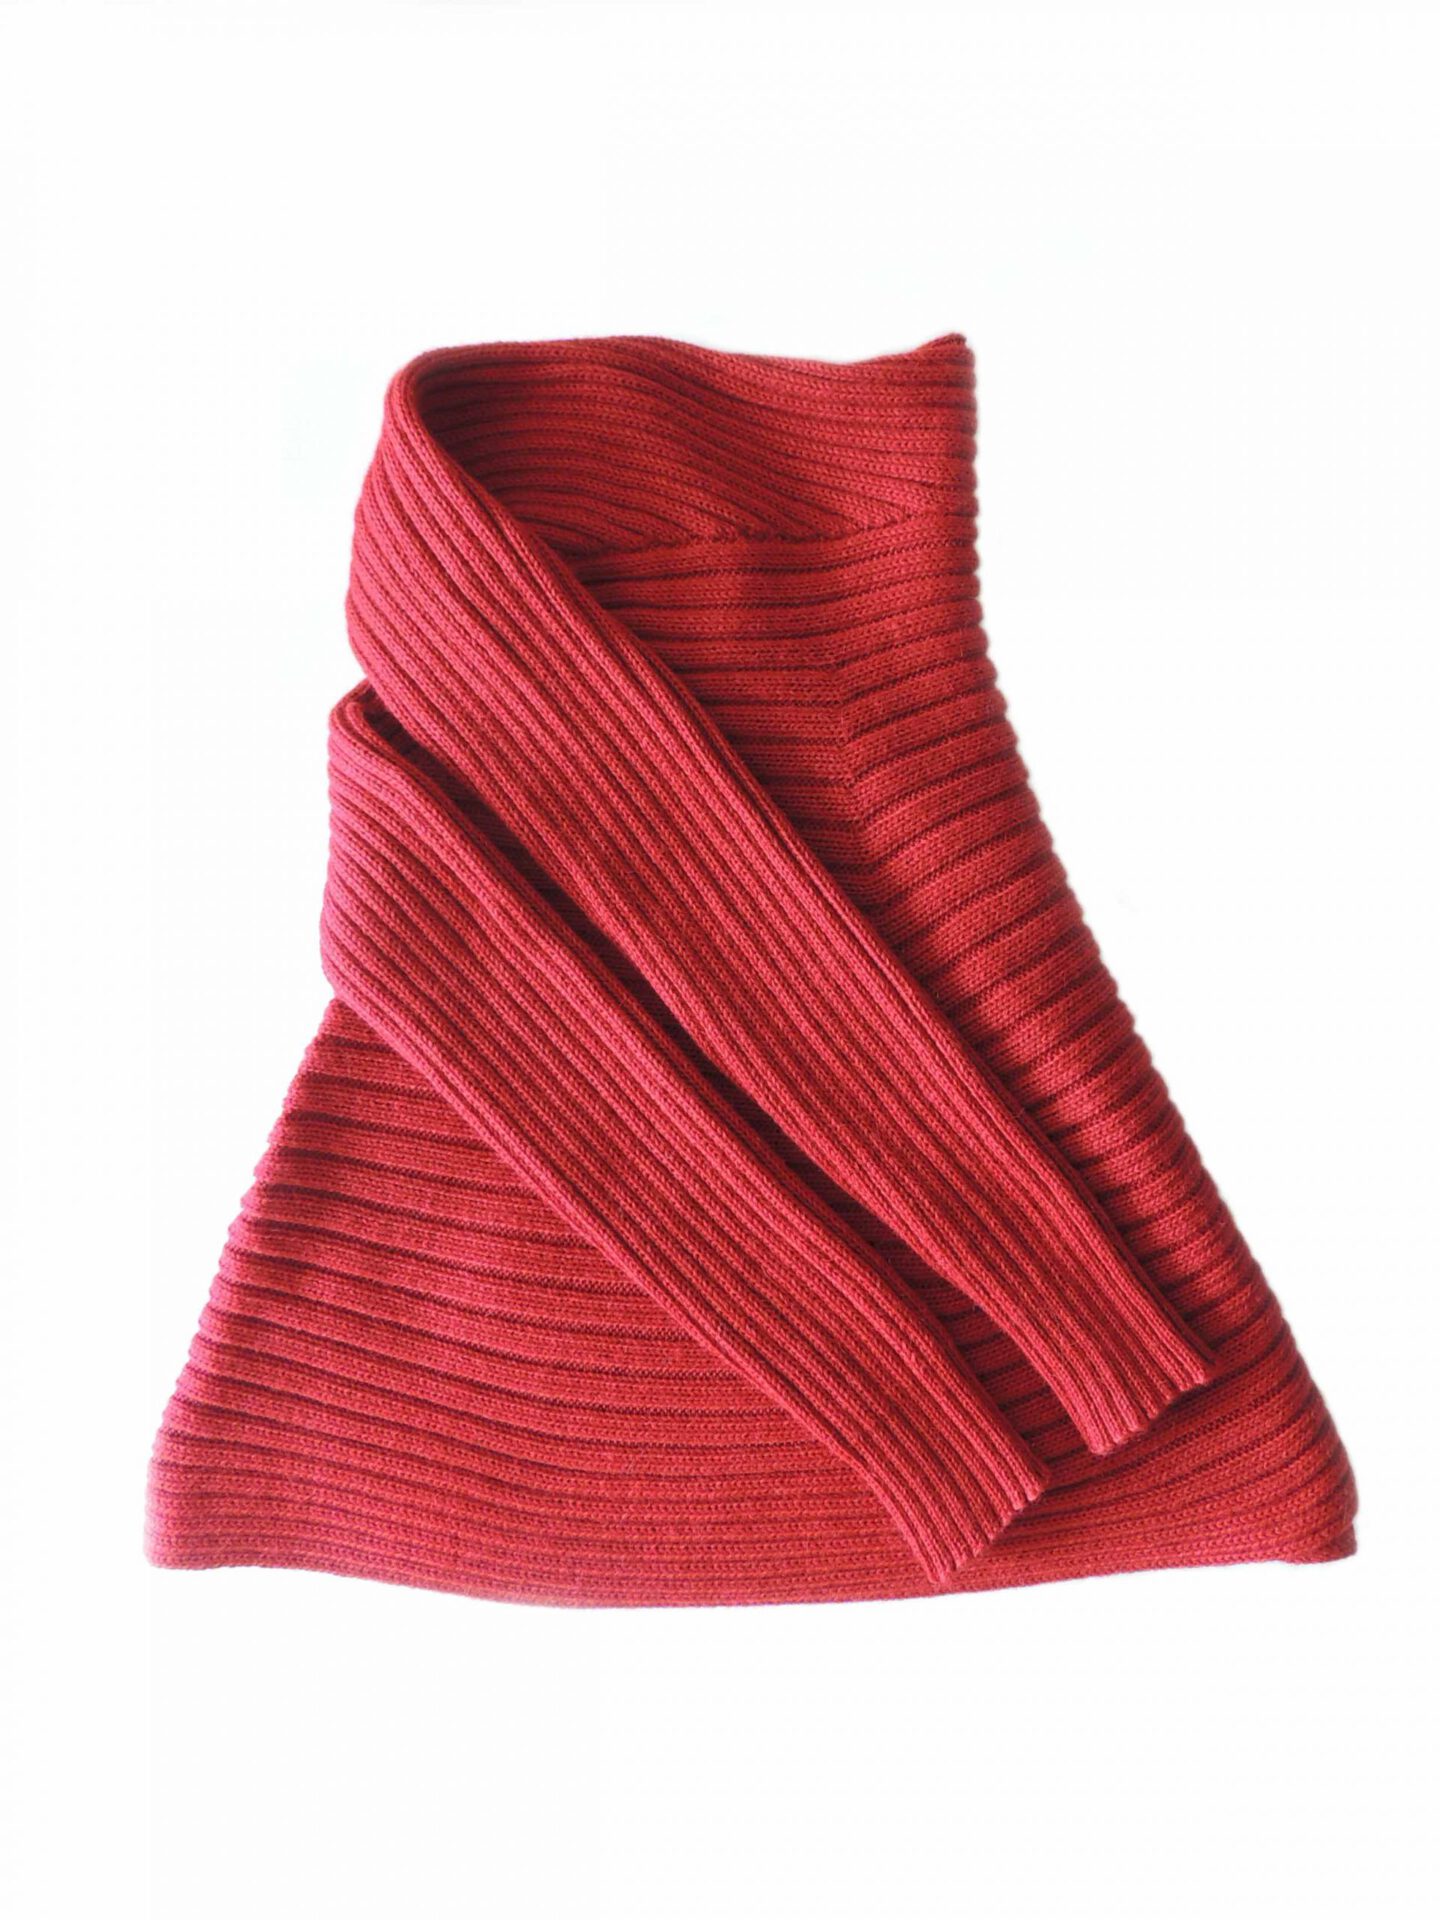 PFL, Full knitted open cardigan model Keyla in a soft alpaca blend, red